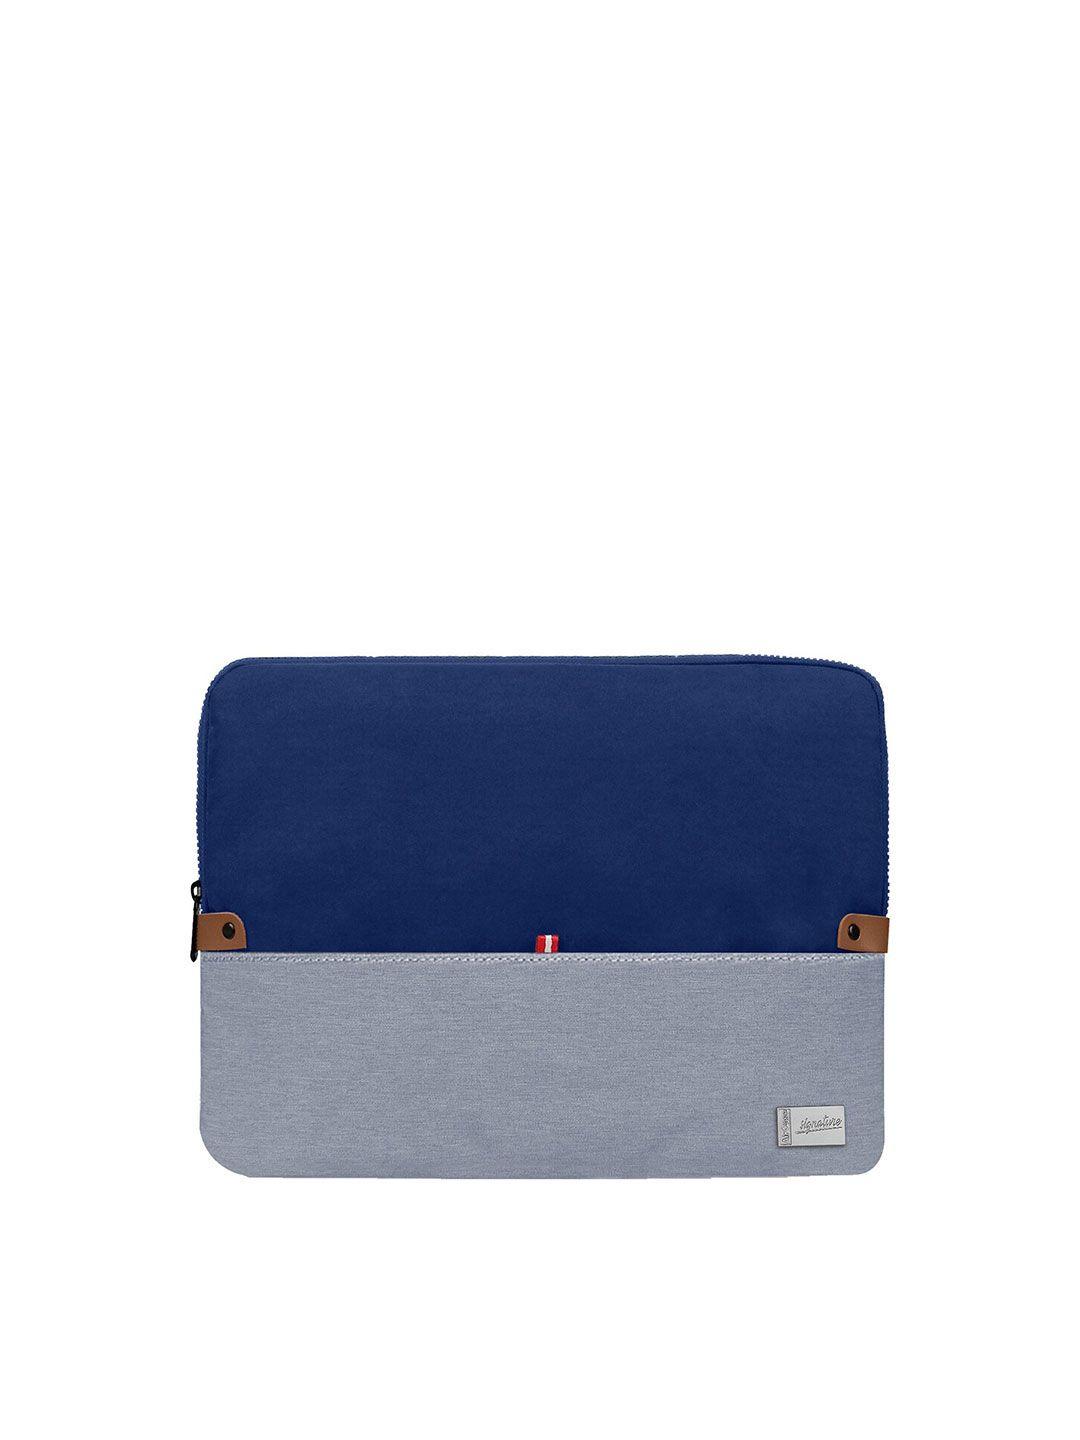 aircase unisex blue & grey colourblocked 13.3 inch laptop sleeve